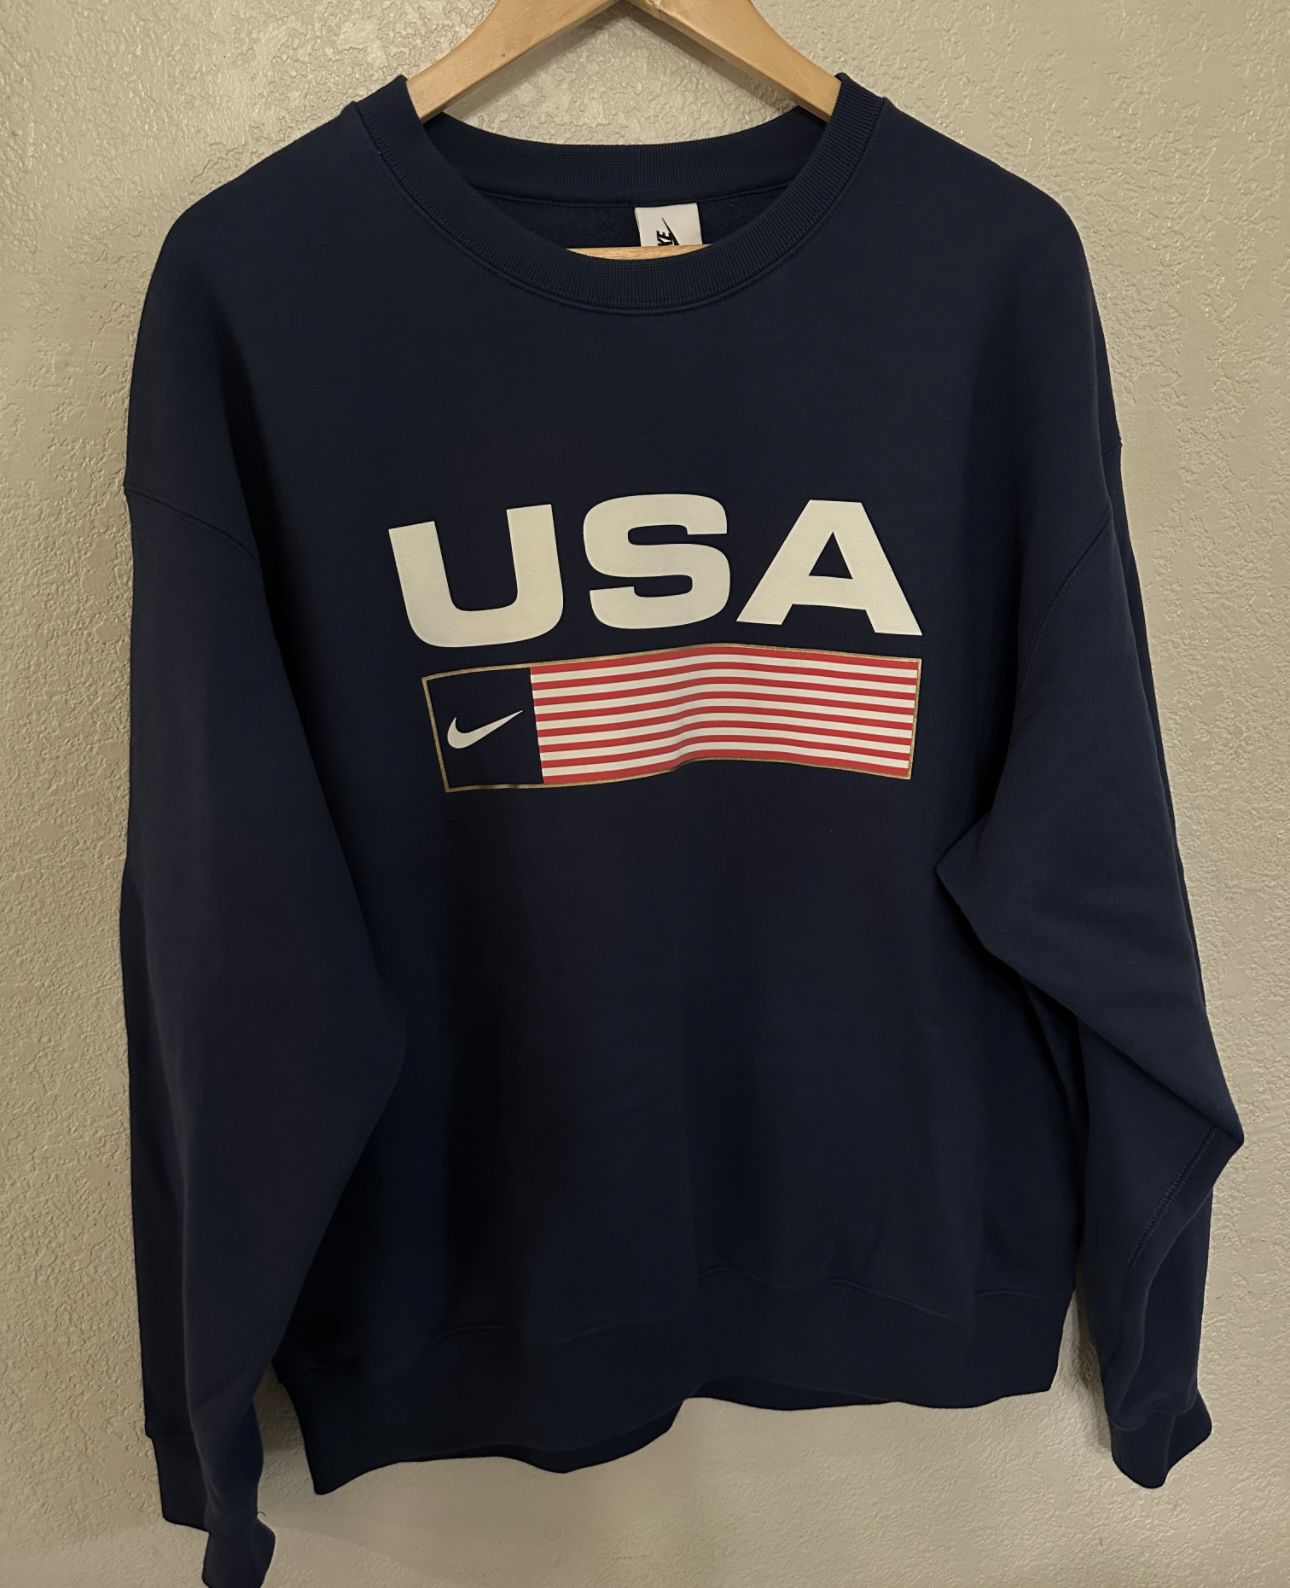 Nike sweatshirt men’s size Large New